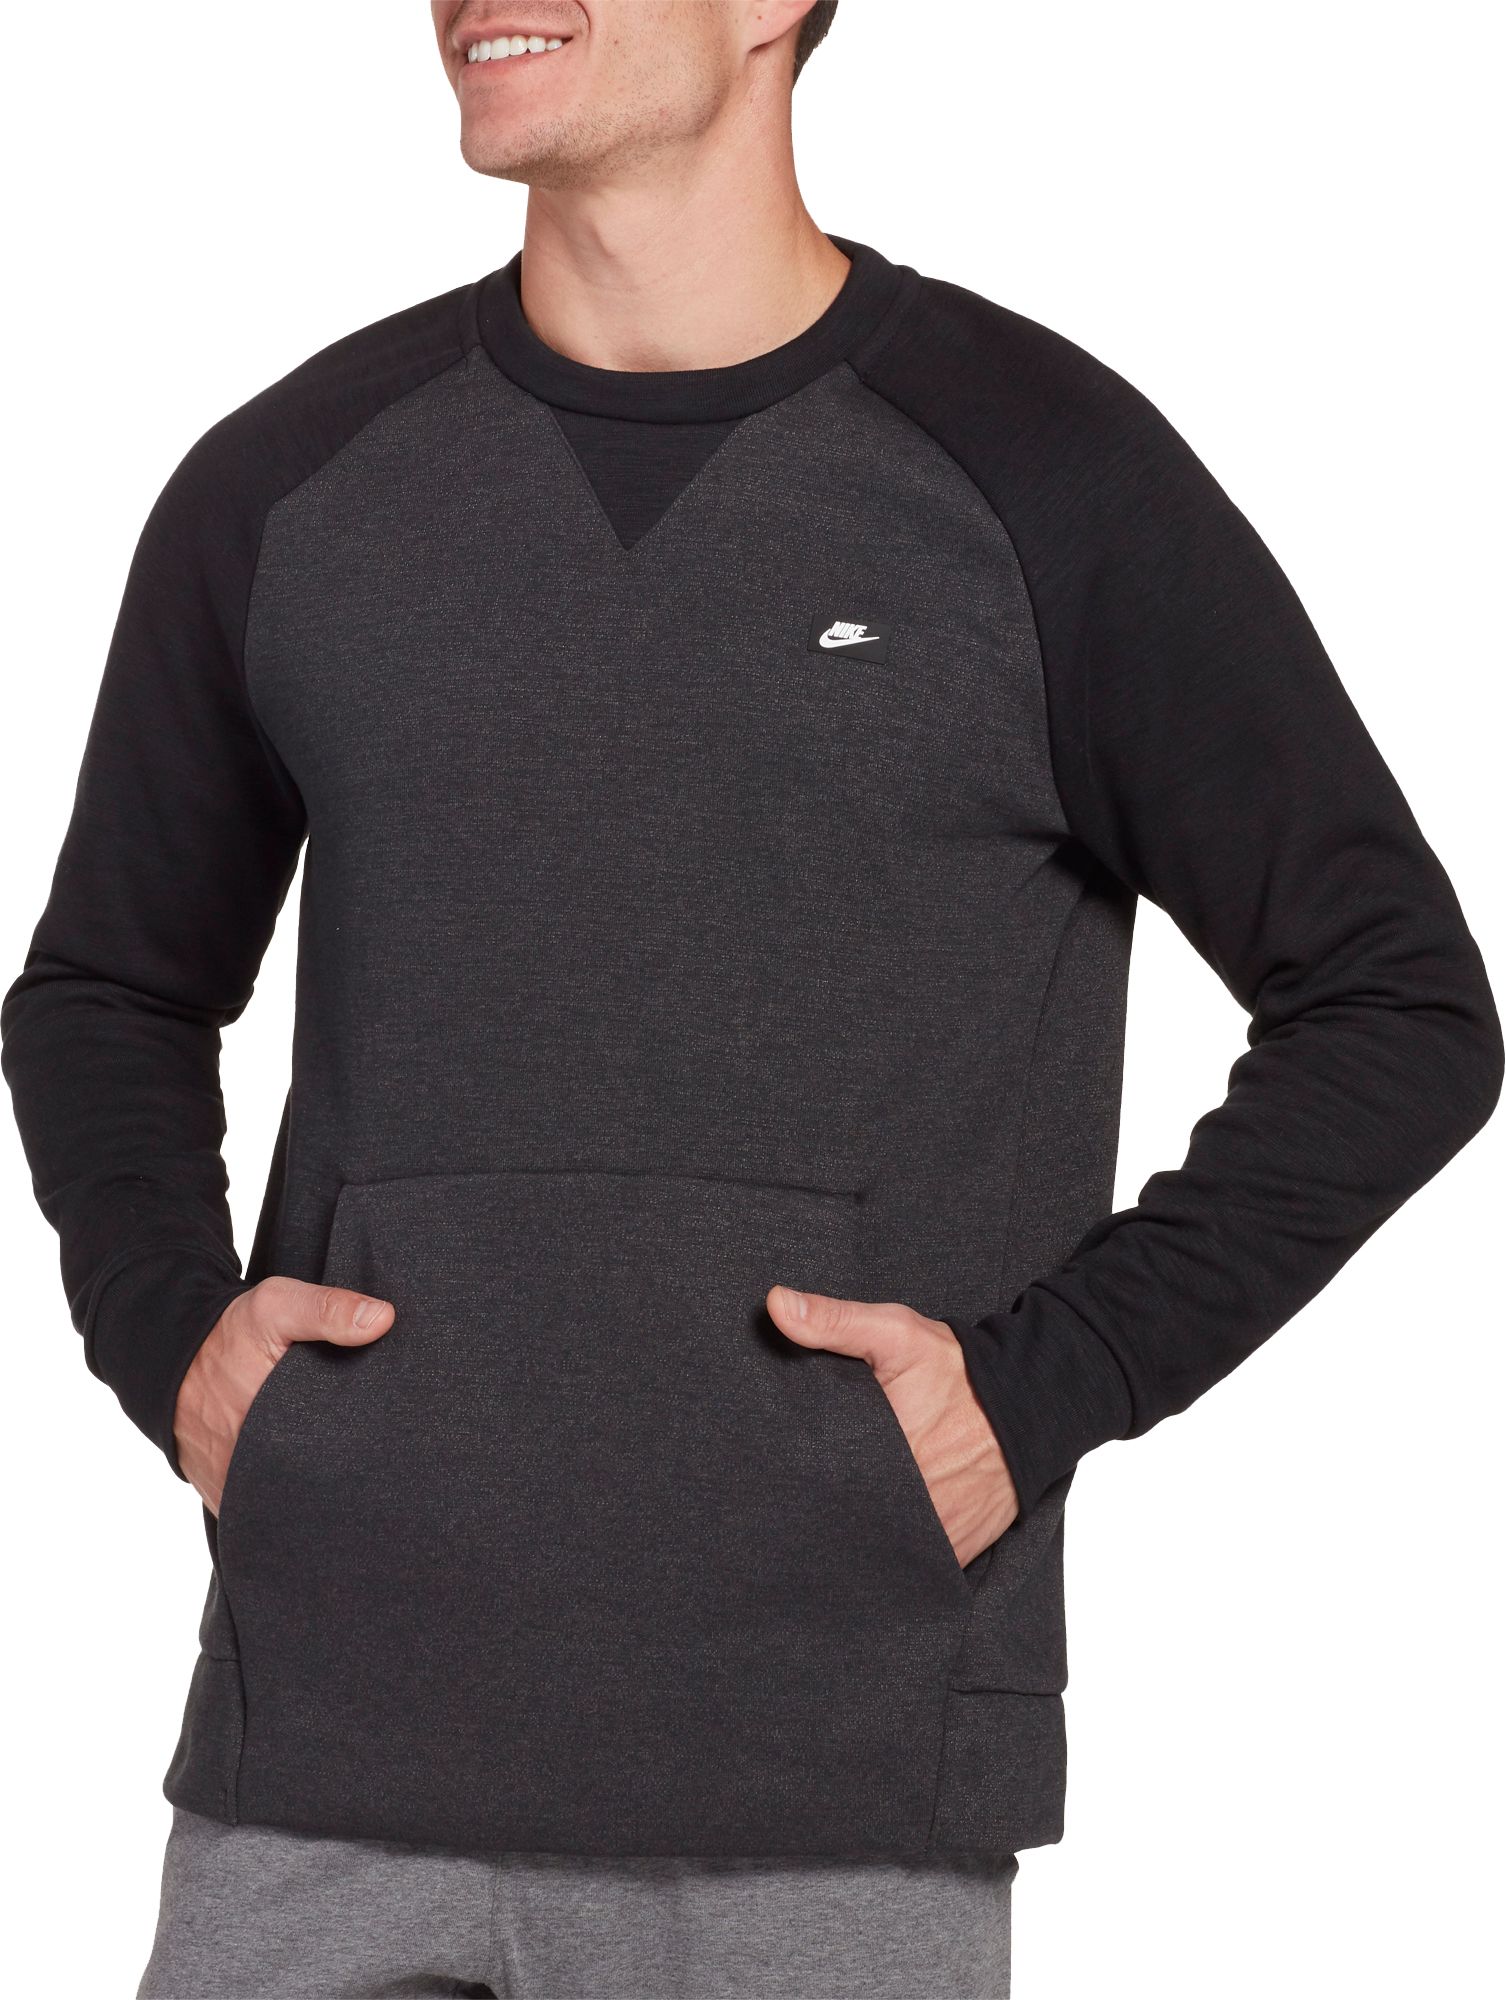 Nike Men's Sportswear Optic Crewneck Pullover - .97 - .97